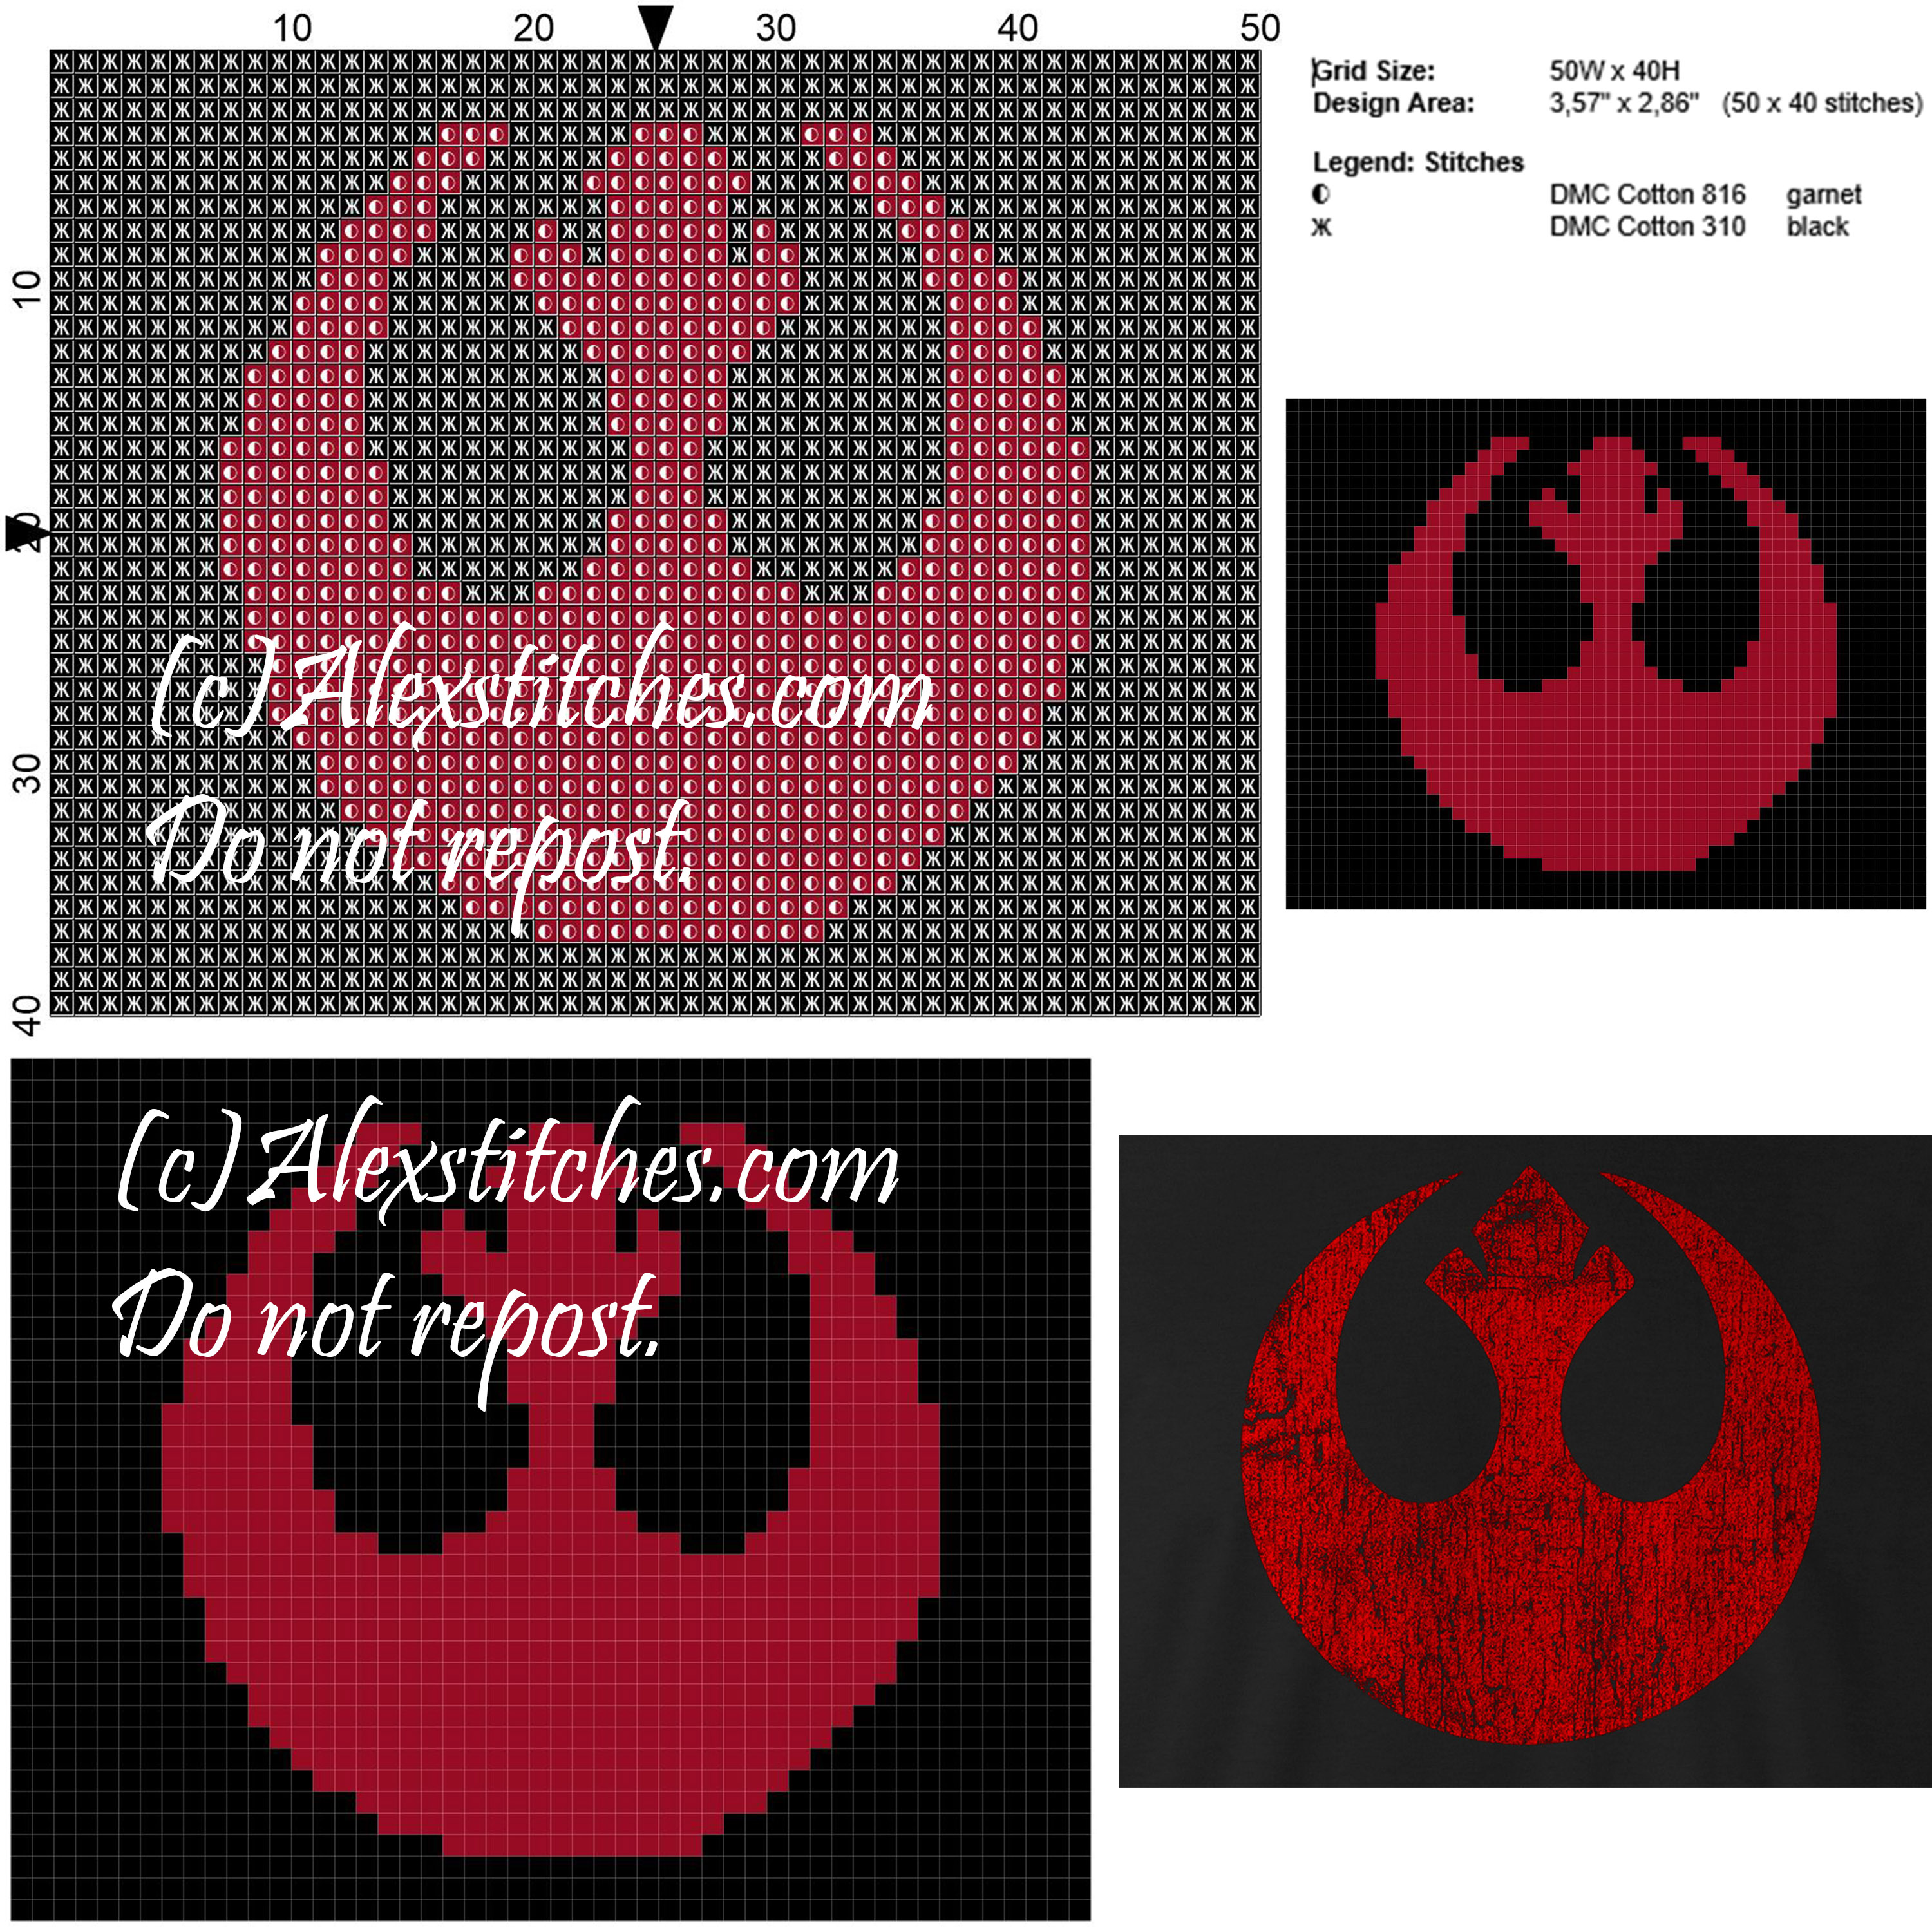 Rebellion symbol (Star Wars) cross stitch pattern 50x40 2 colors